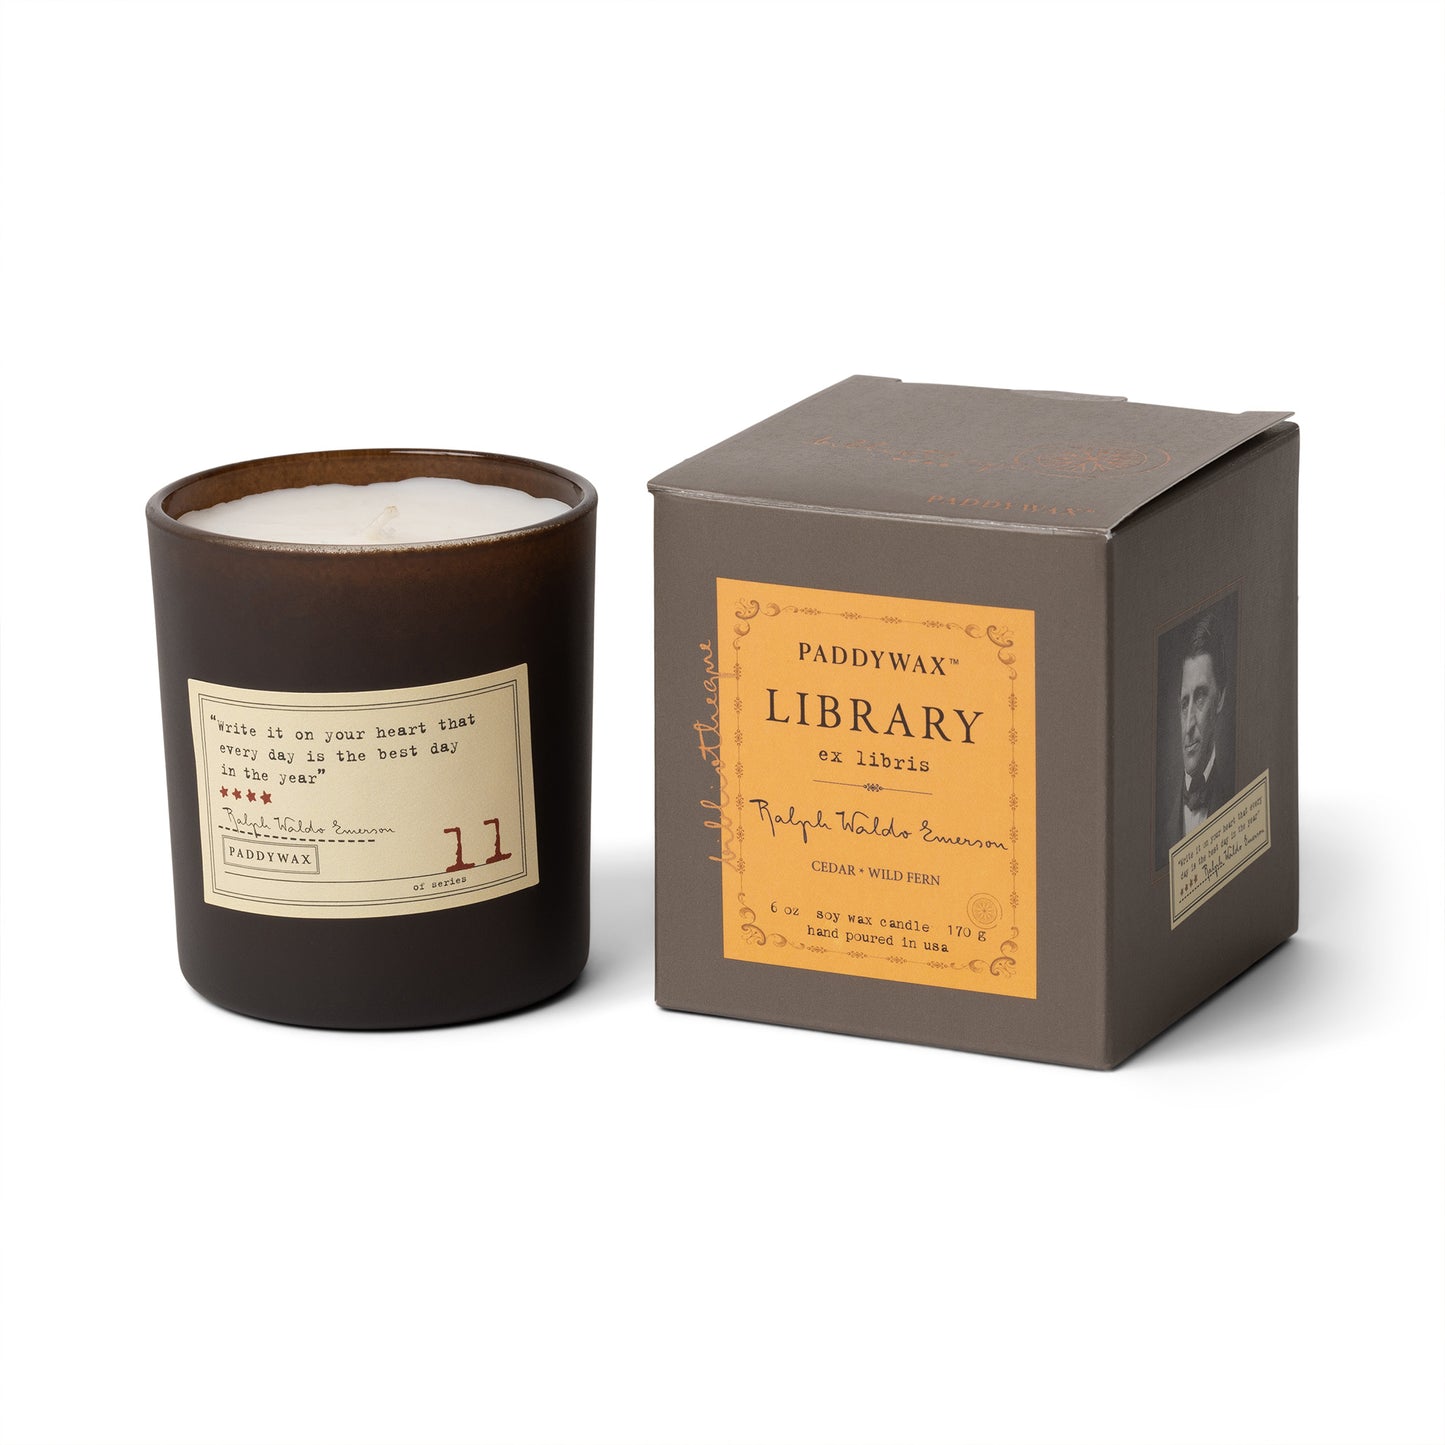 Library 6 oz Candle - Ralph Waldo Emerson - single wick with orange colored label